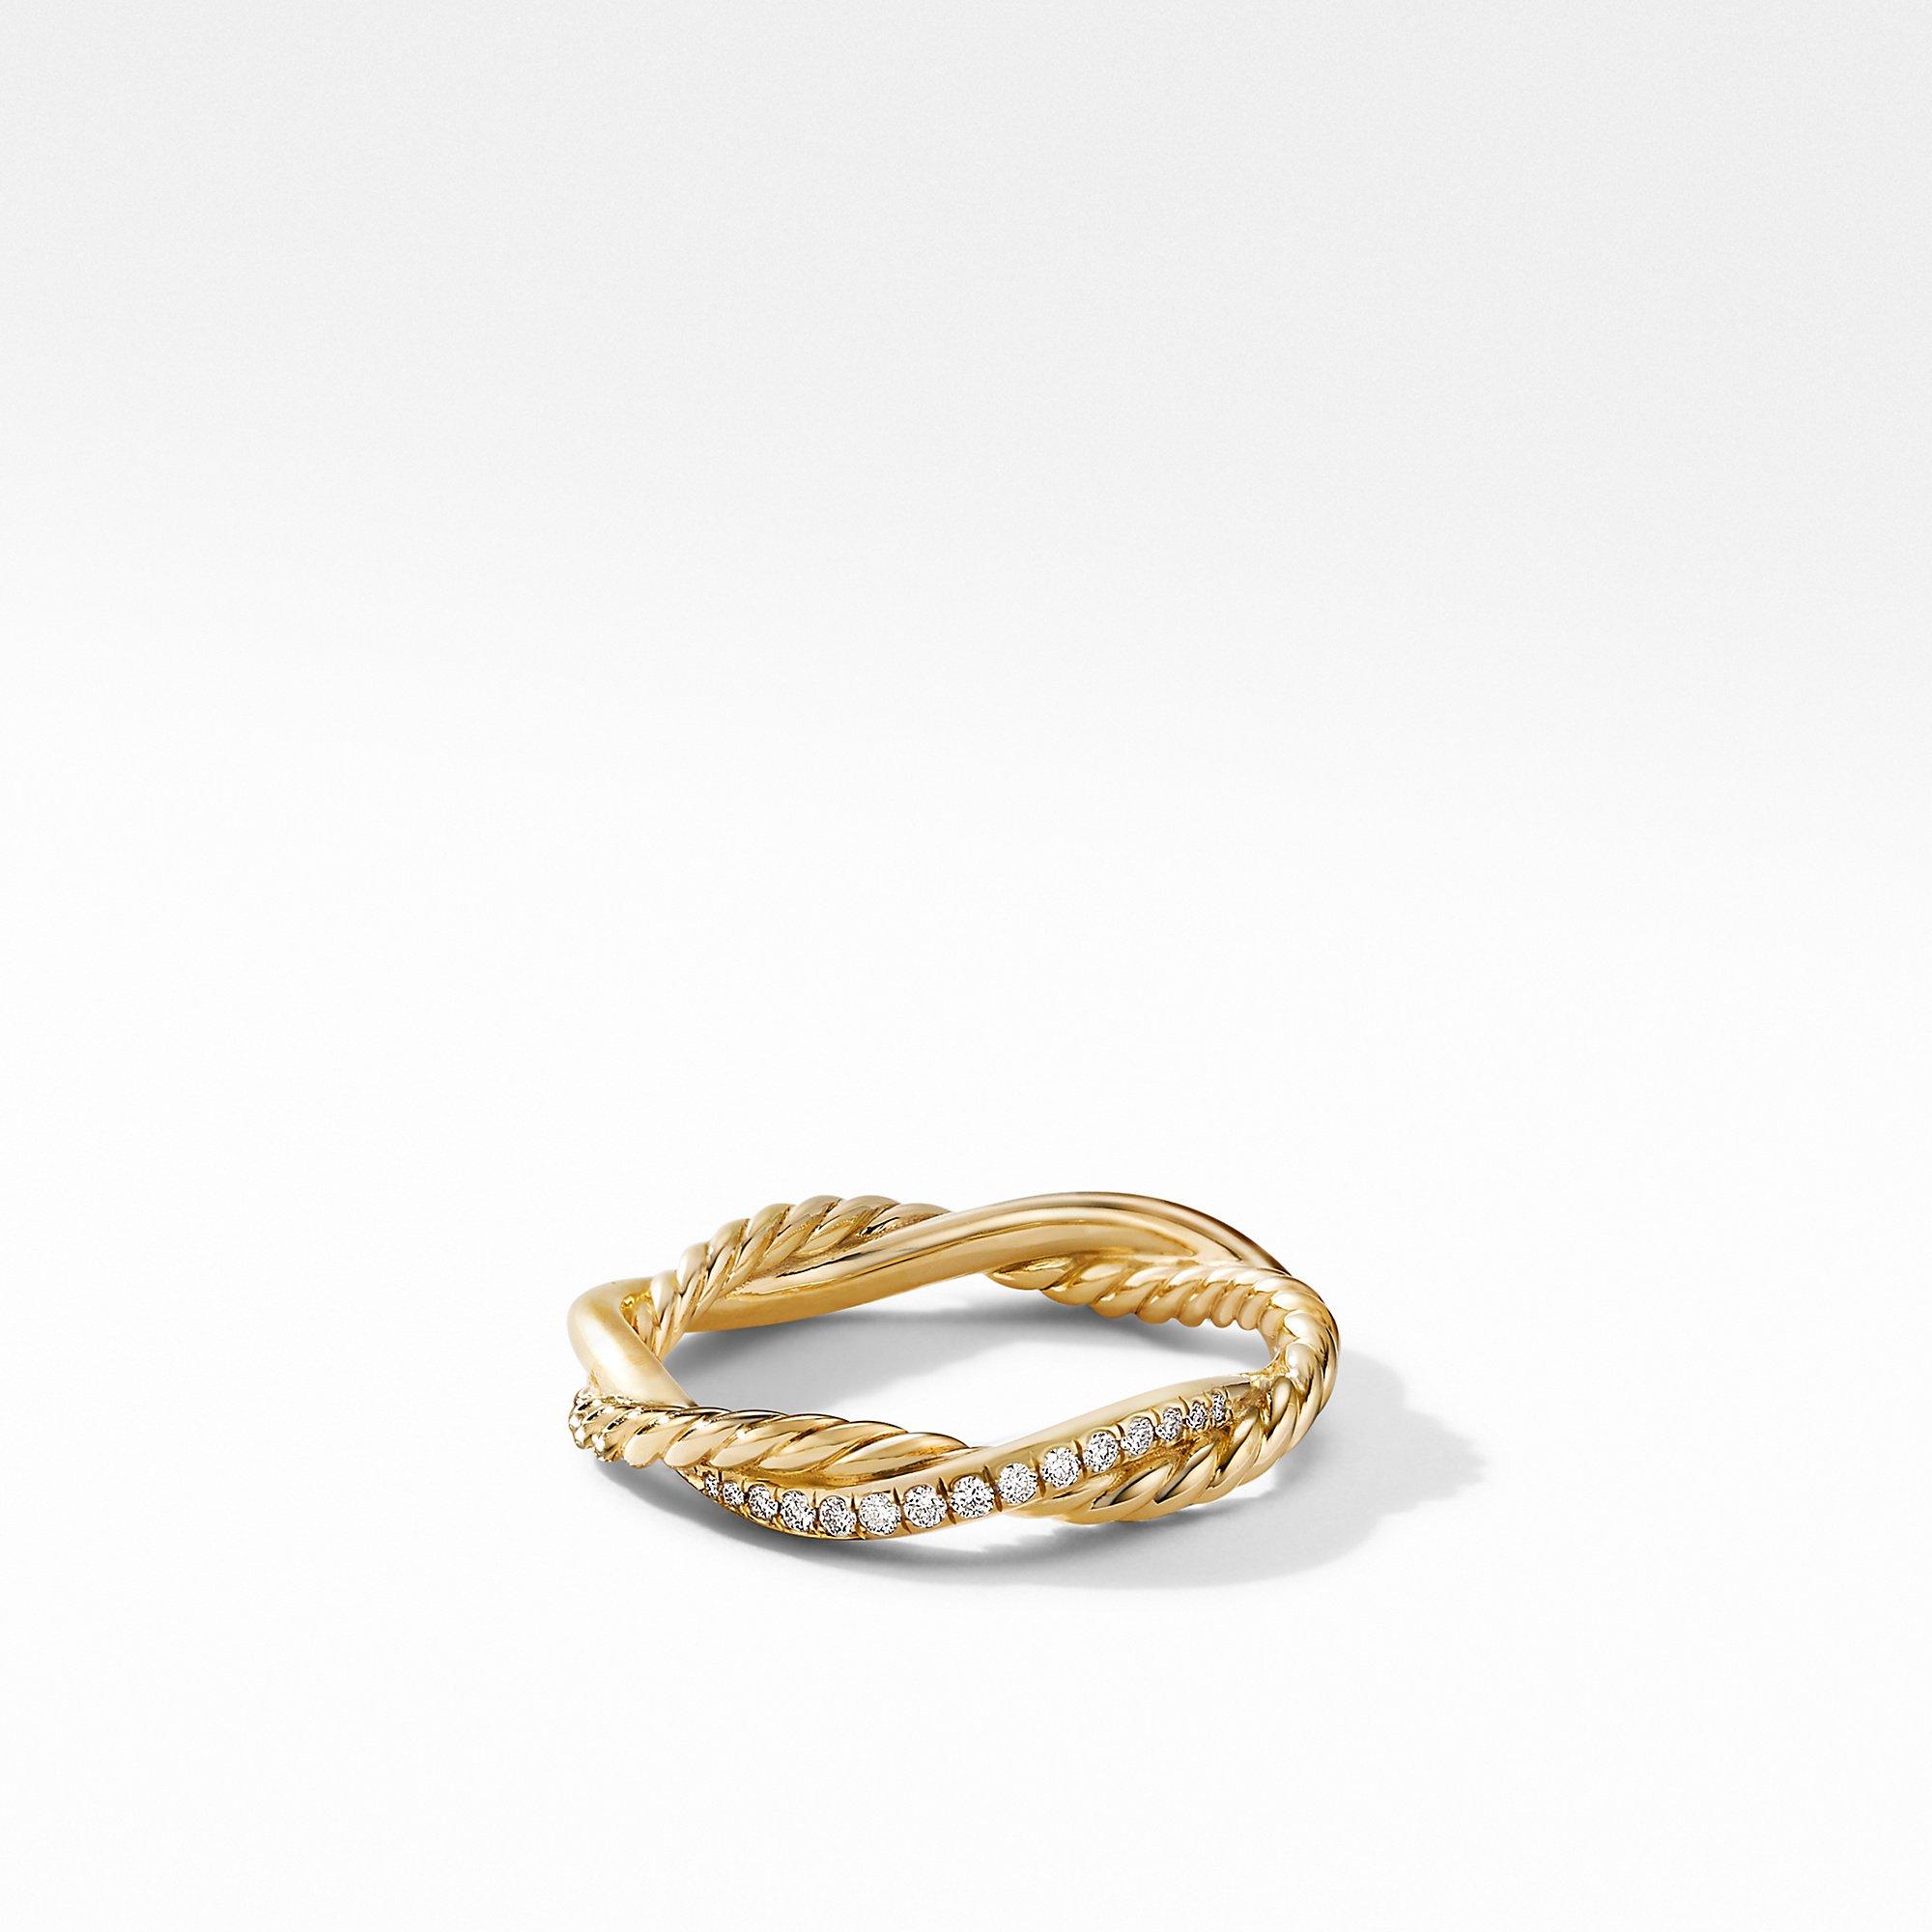 David Yurman Petite Infinity Twisted Ring in 18k Yellow Gold, size 6.5